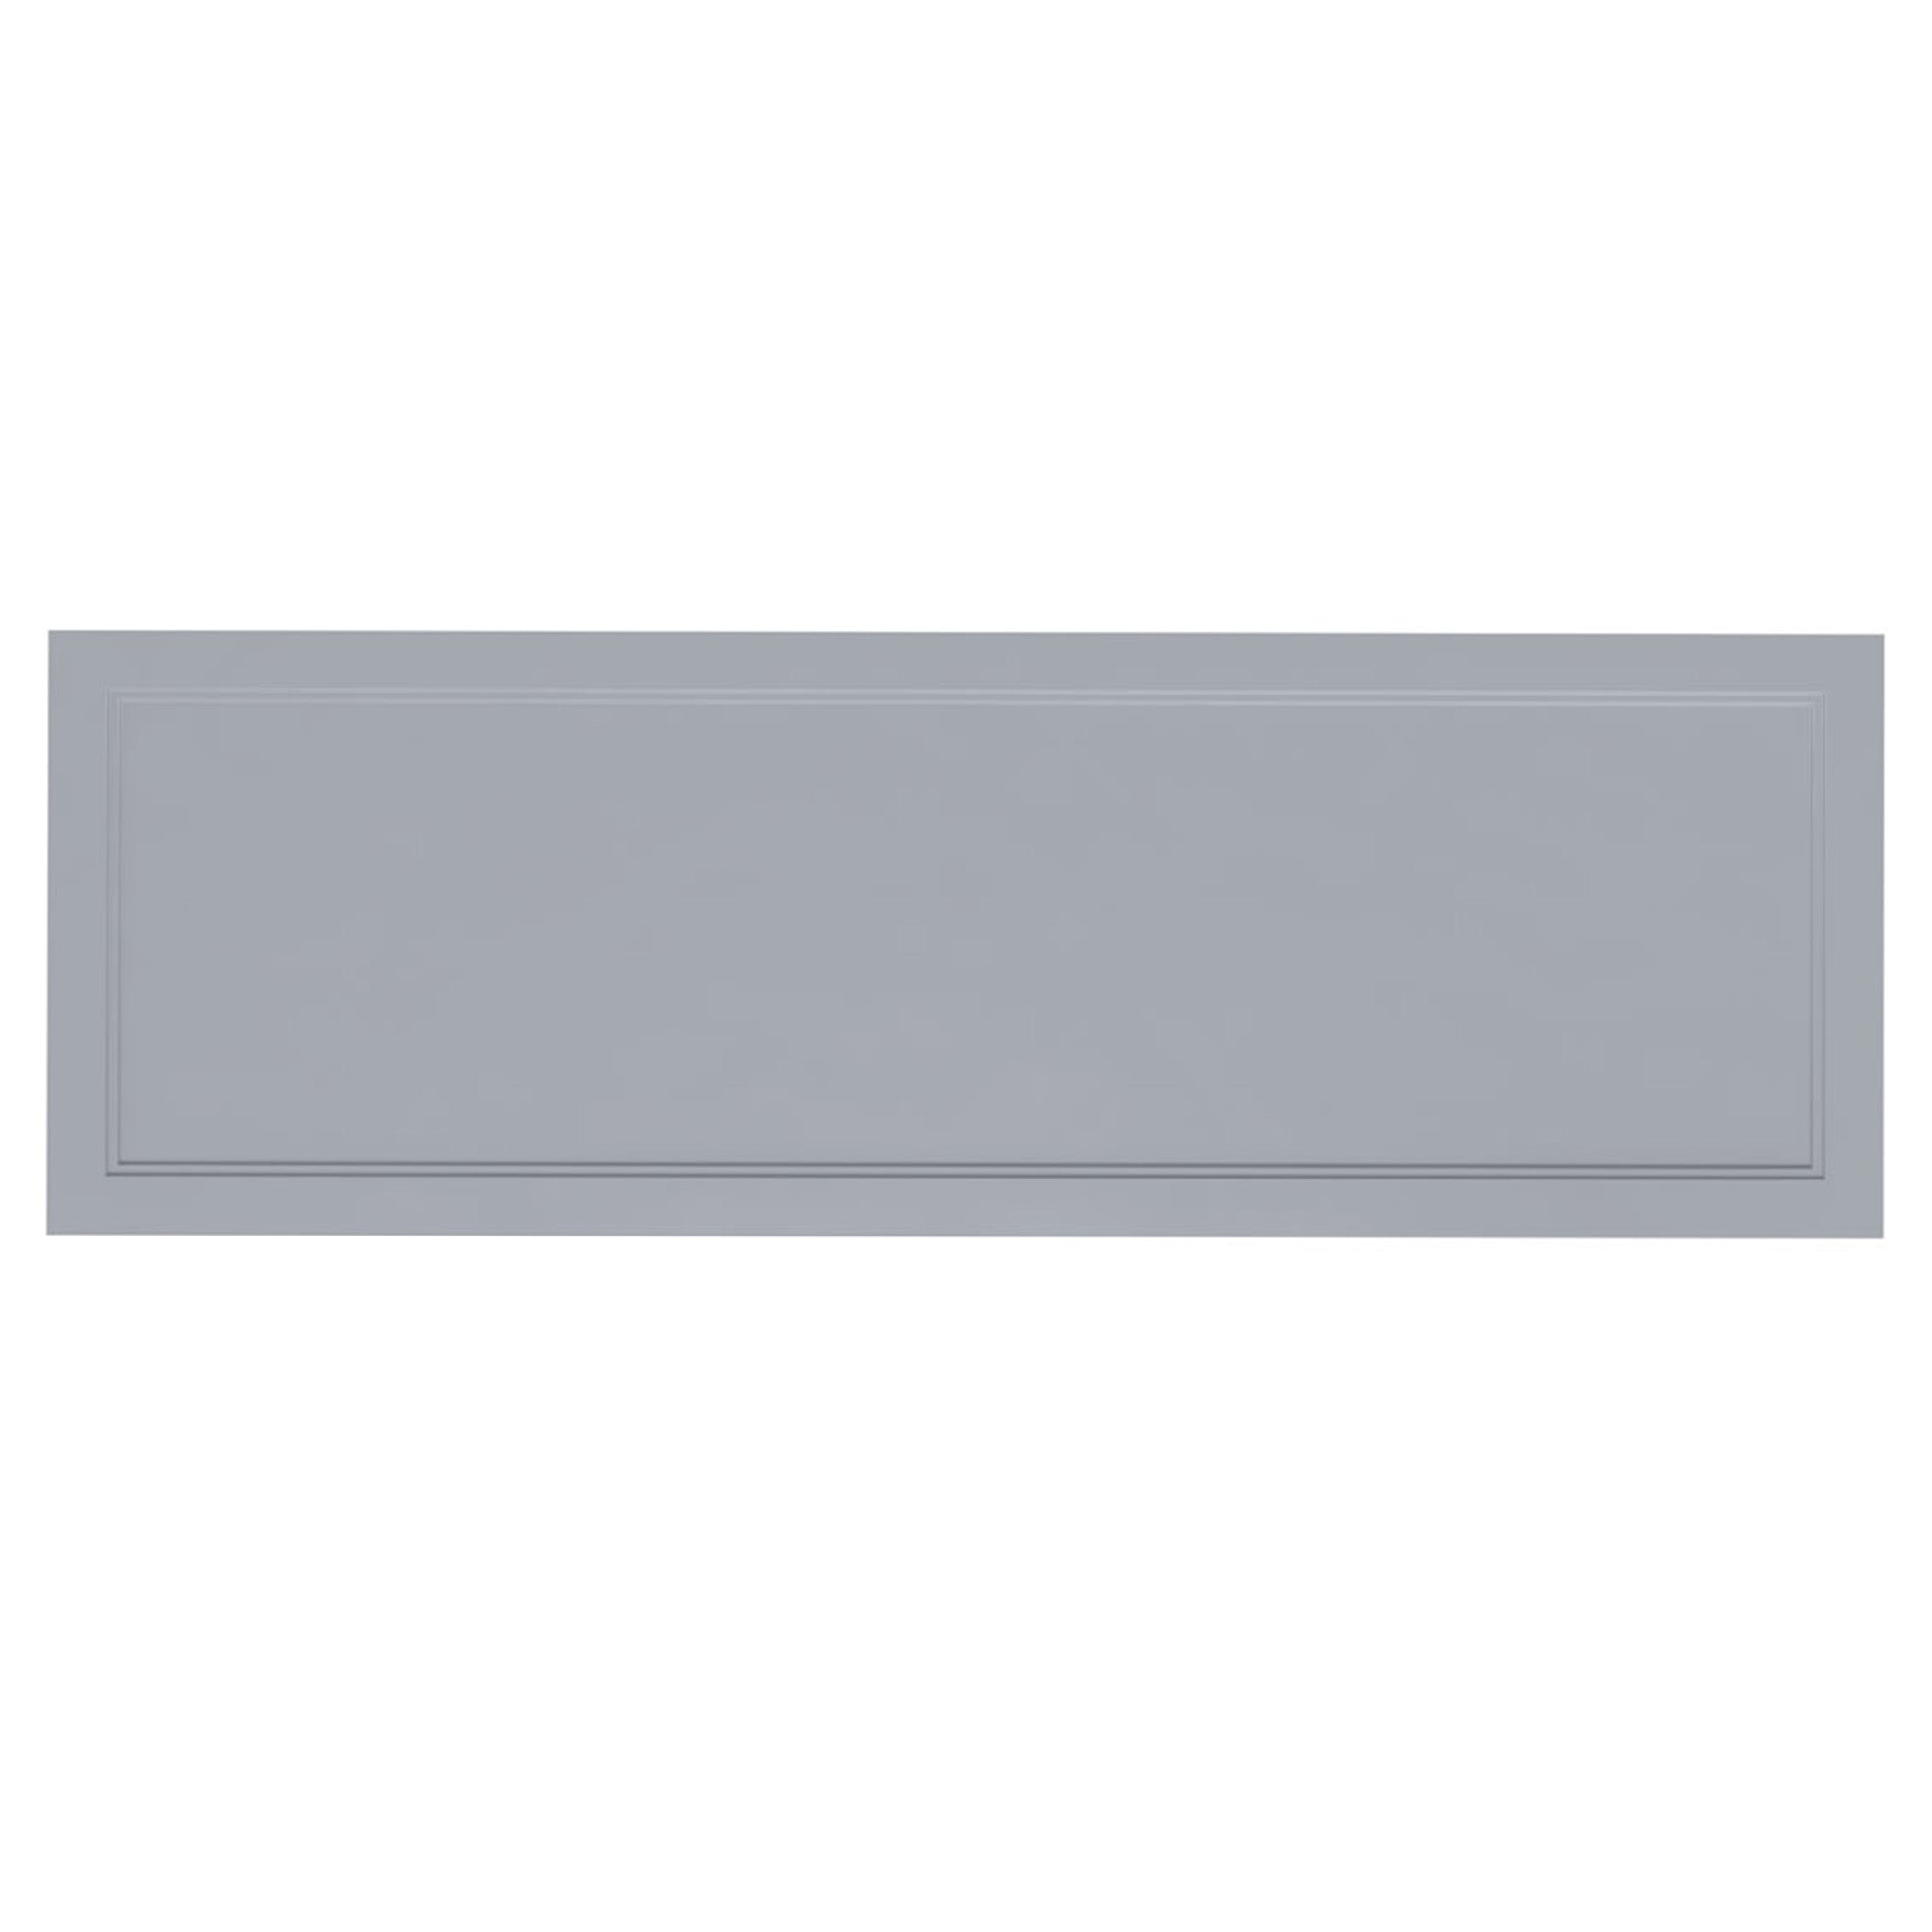 burlington arundel 1700 front bath panel classic grey